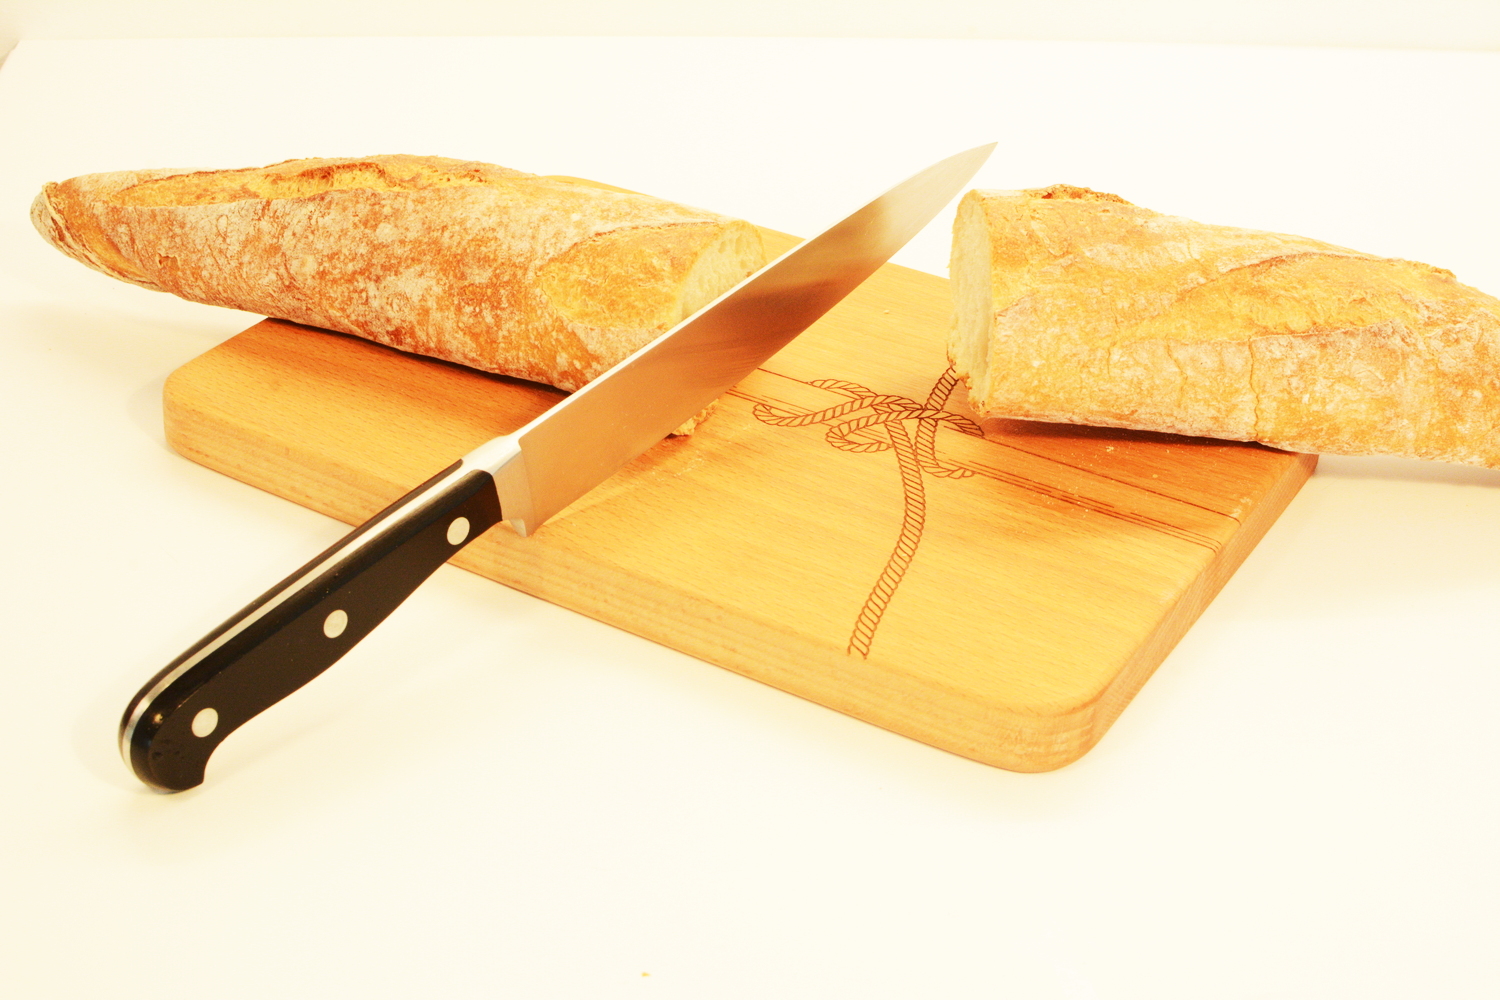 Cutting Board in use, cutting bread